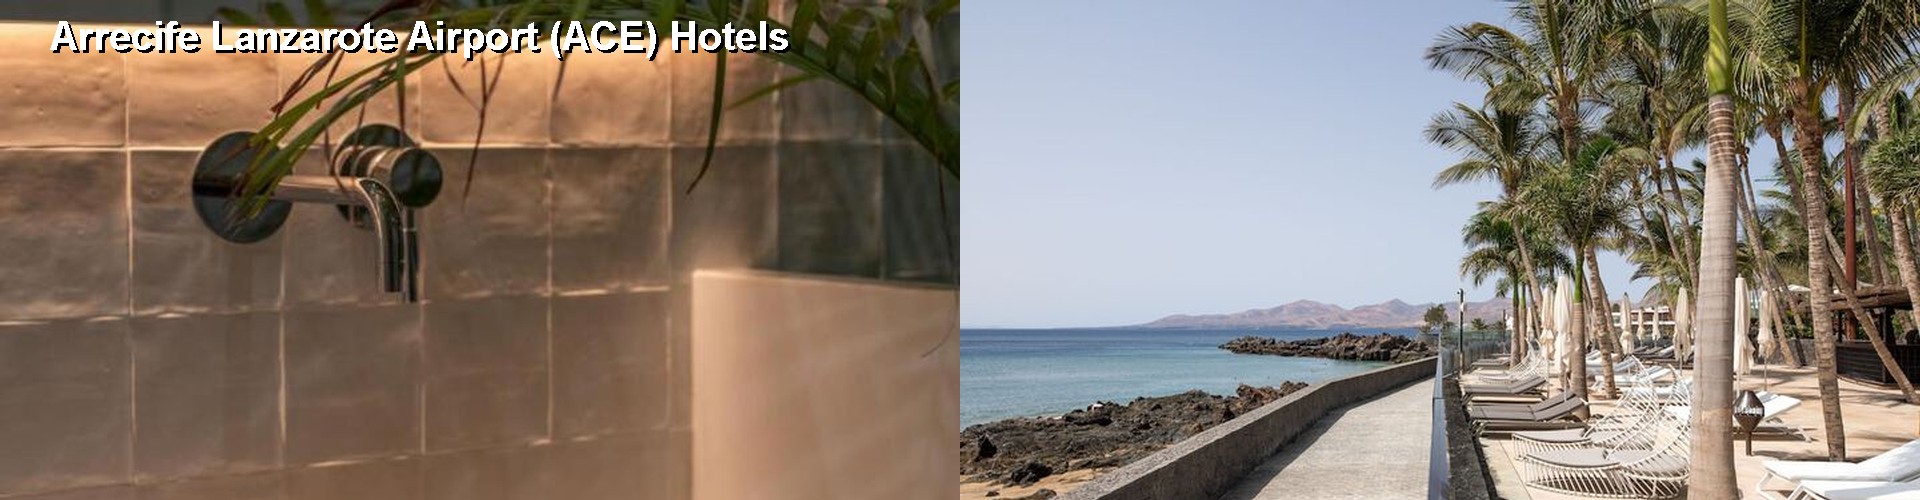 5 Best Hotels near Arrecife Lanzarote Airport (ACE)